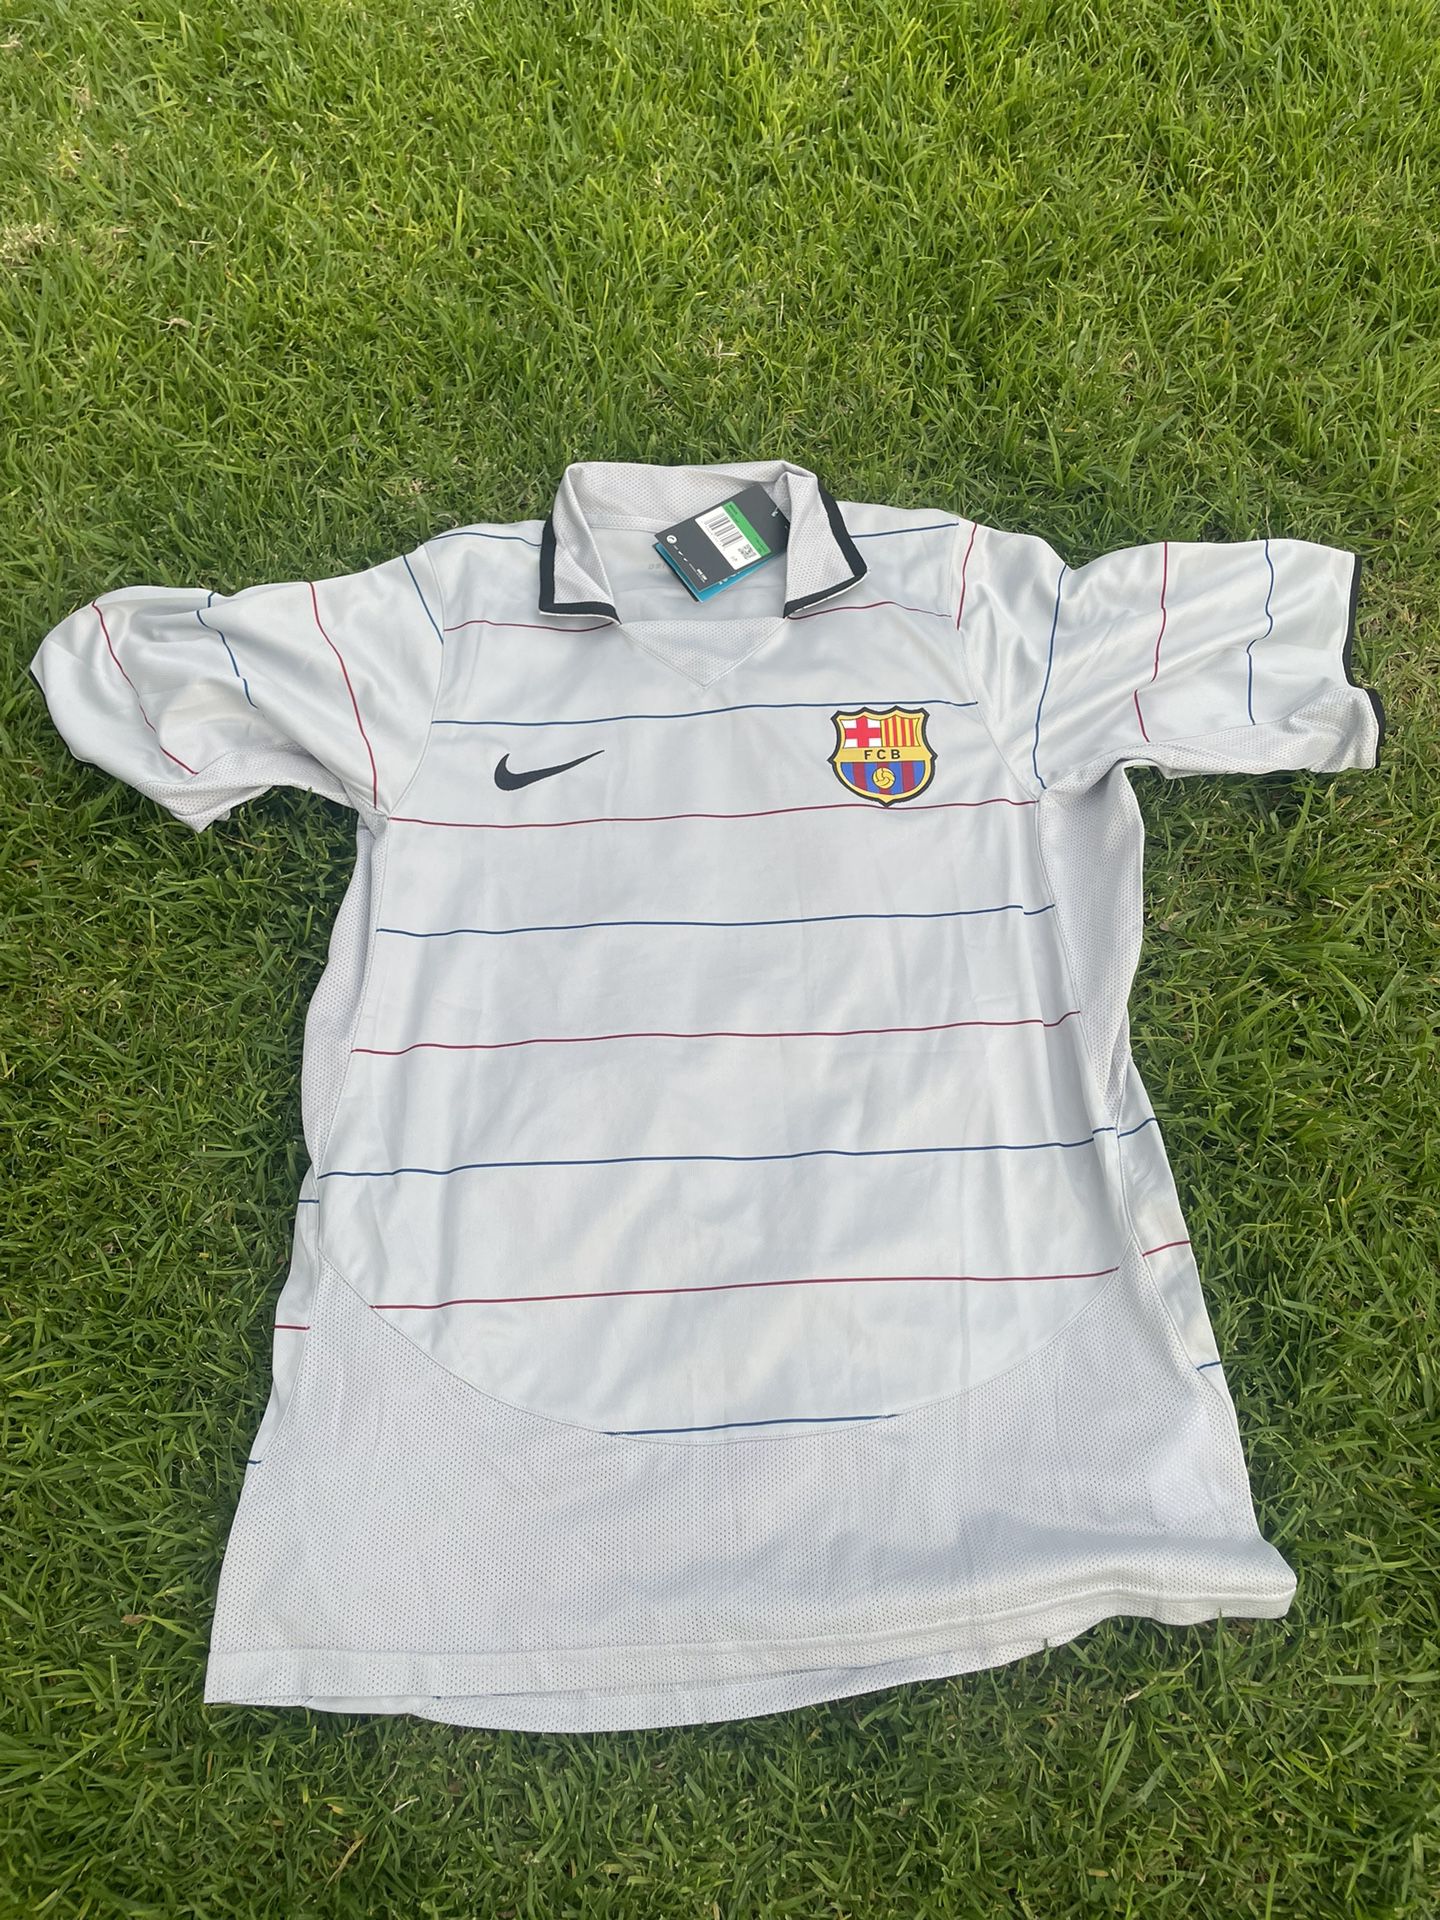 Barcelona Club retro Ronaldhino 10 size XL